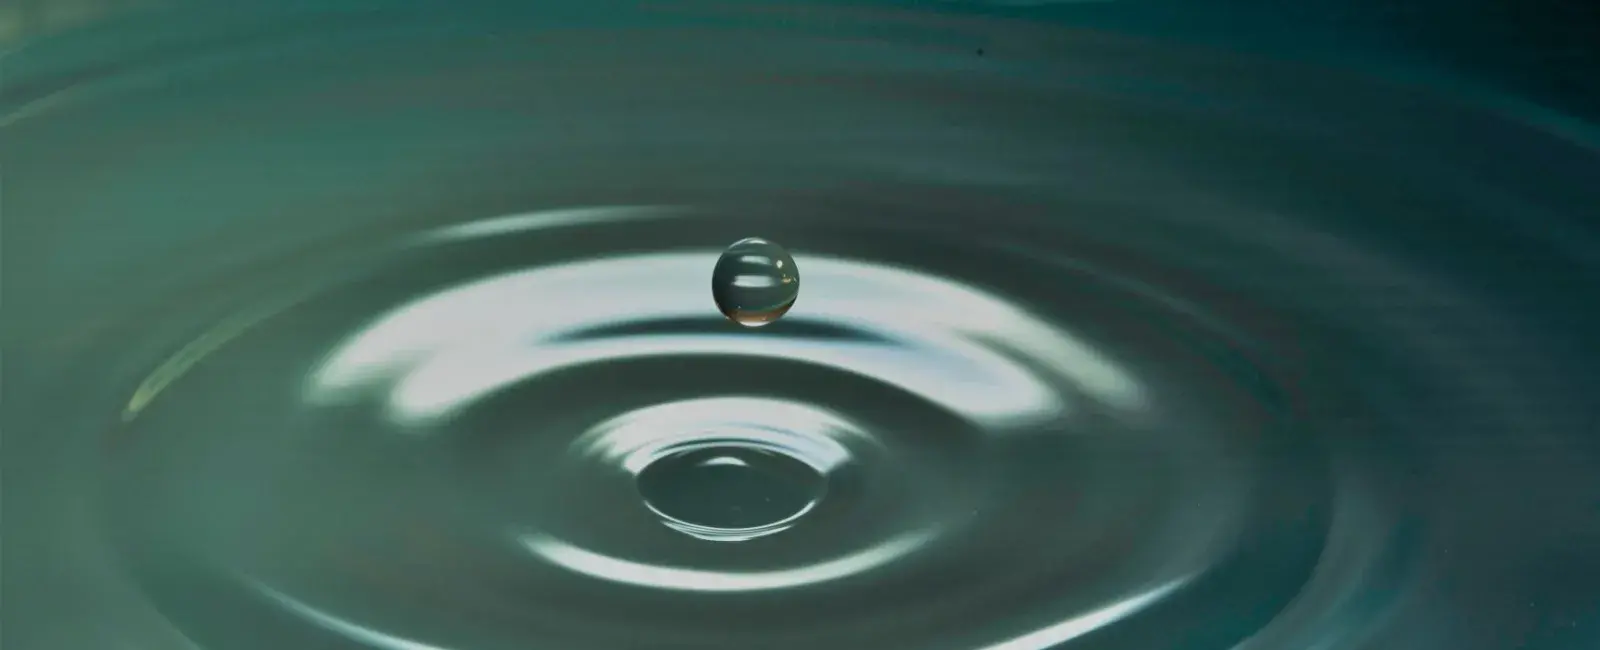 Drop of water creating ripple